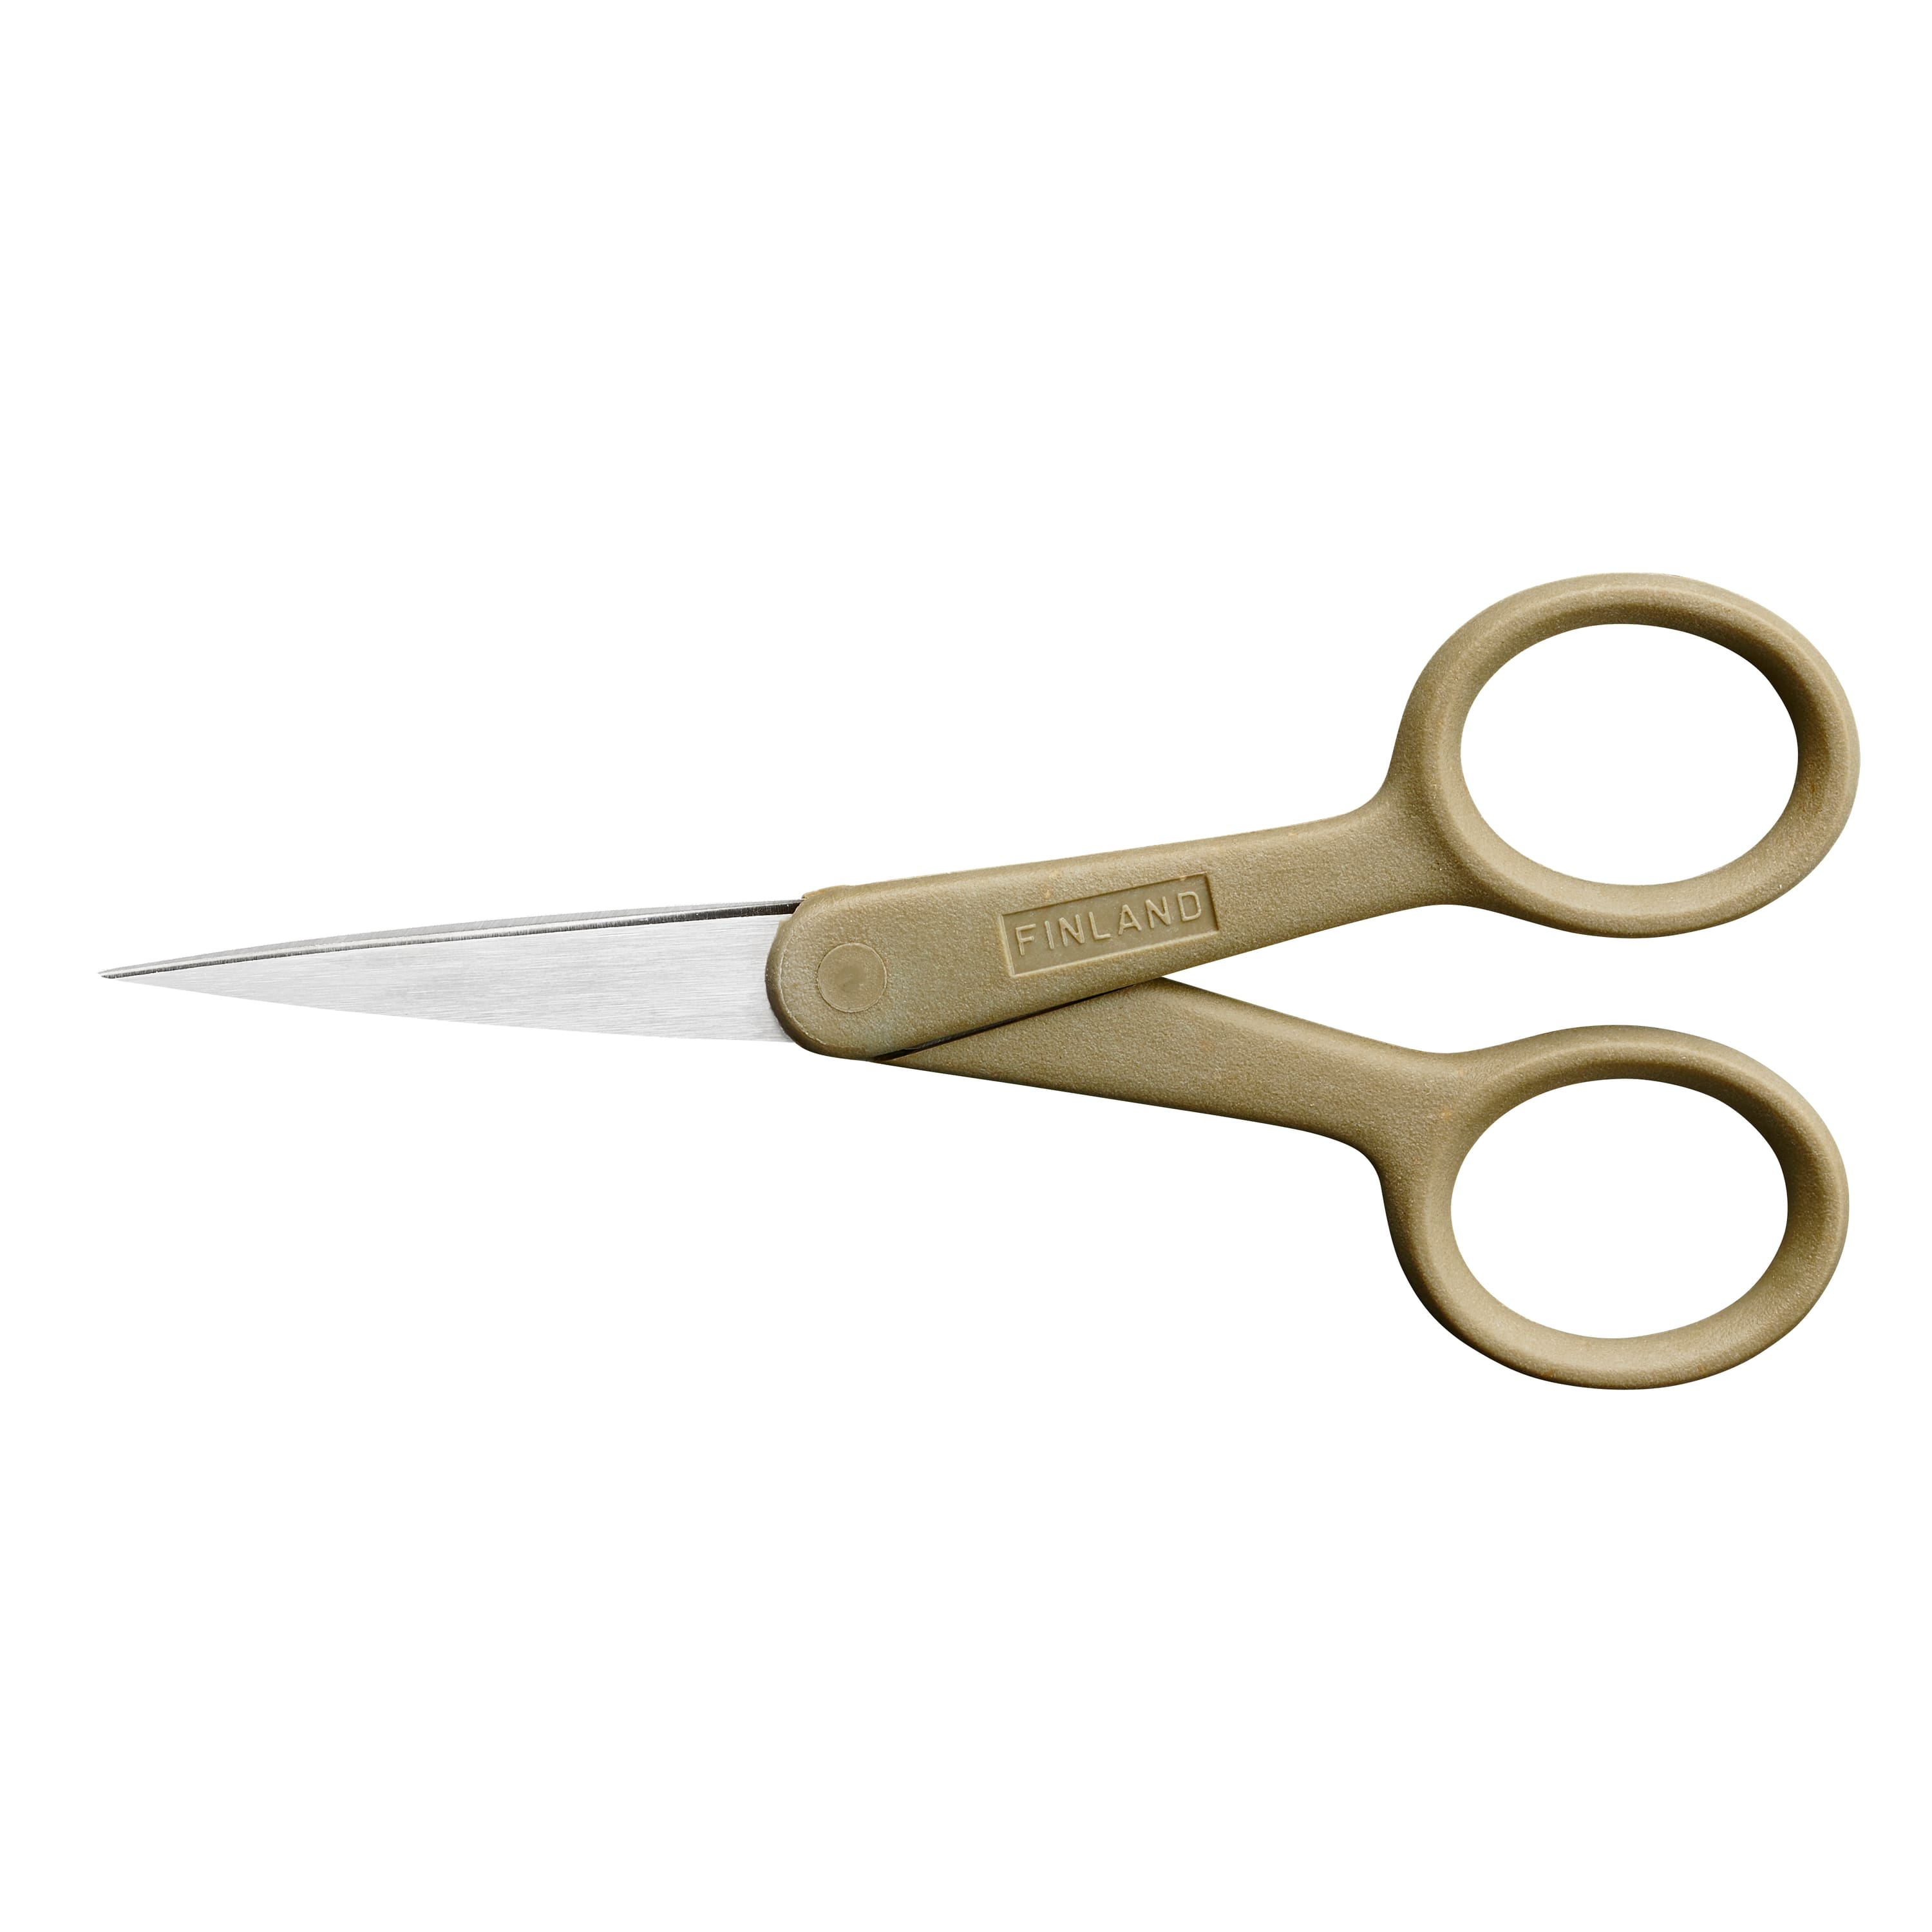 Micro-Tip Scissors #5 by Fiskars